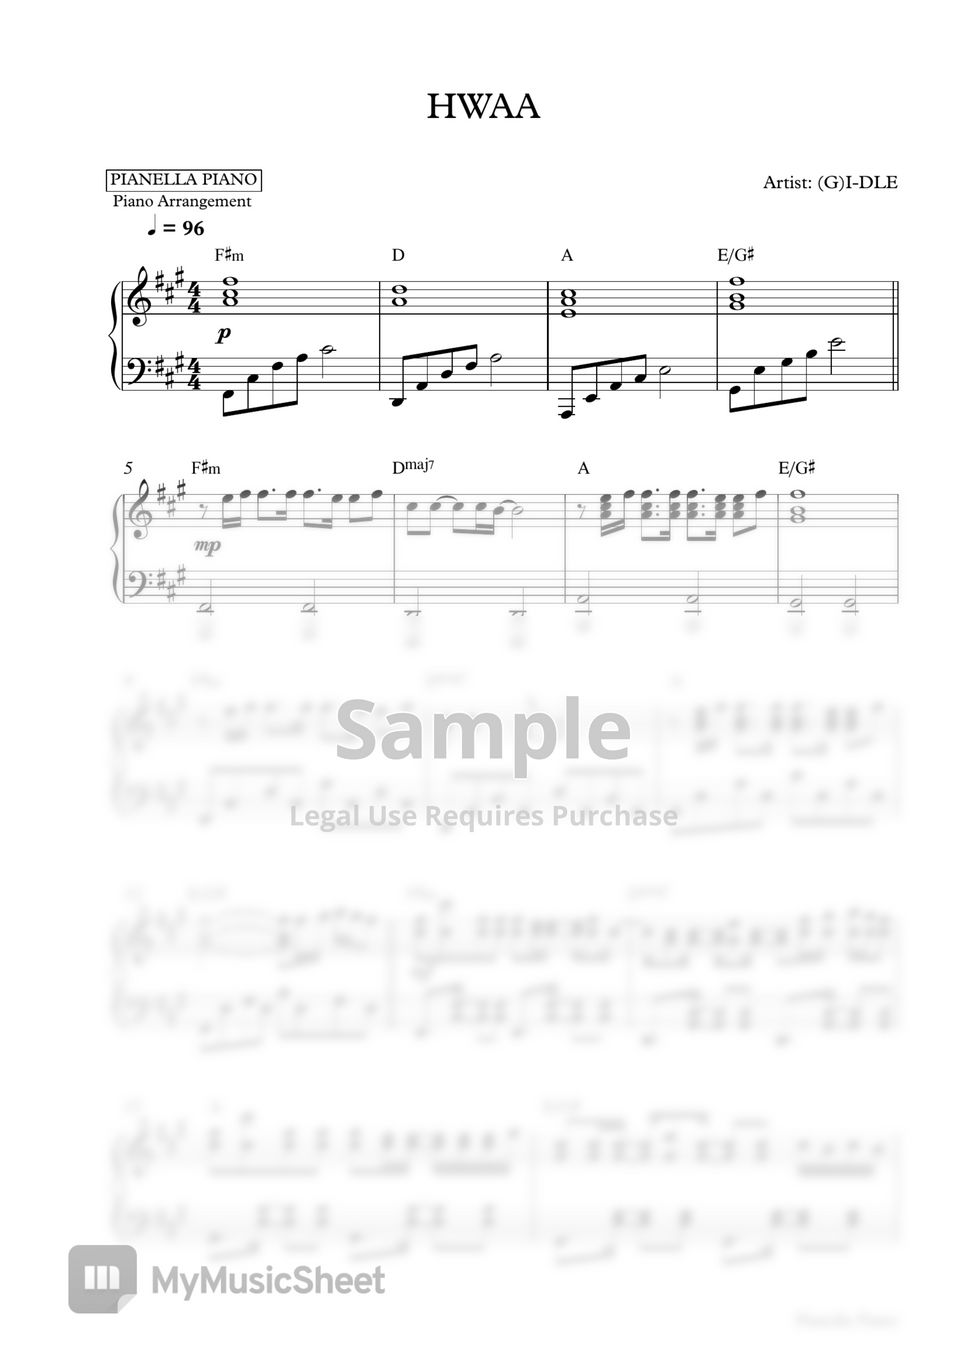 (G)I-DLE - HWAA (Piano Sheet) by Pianella Piano